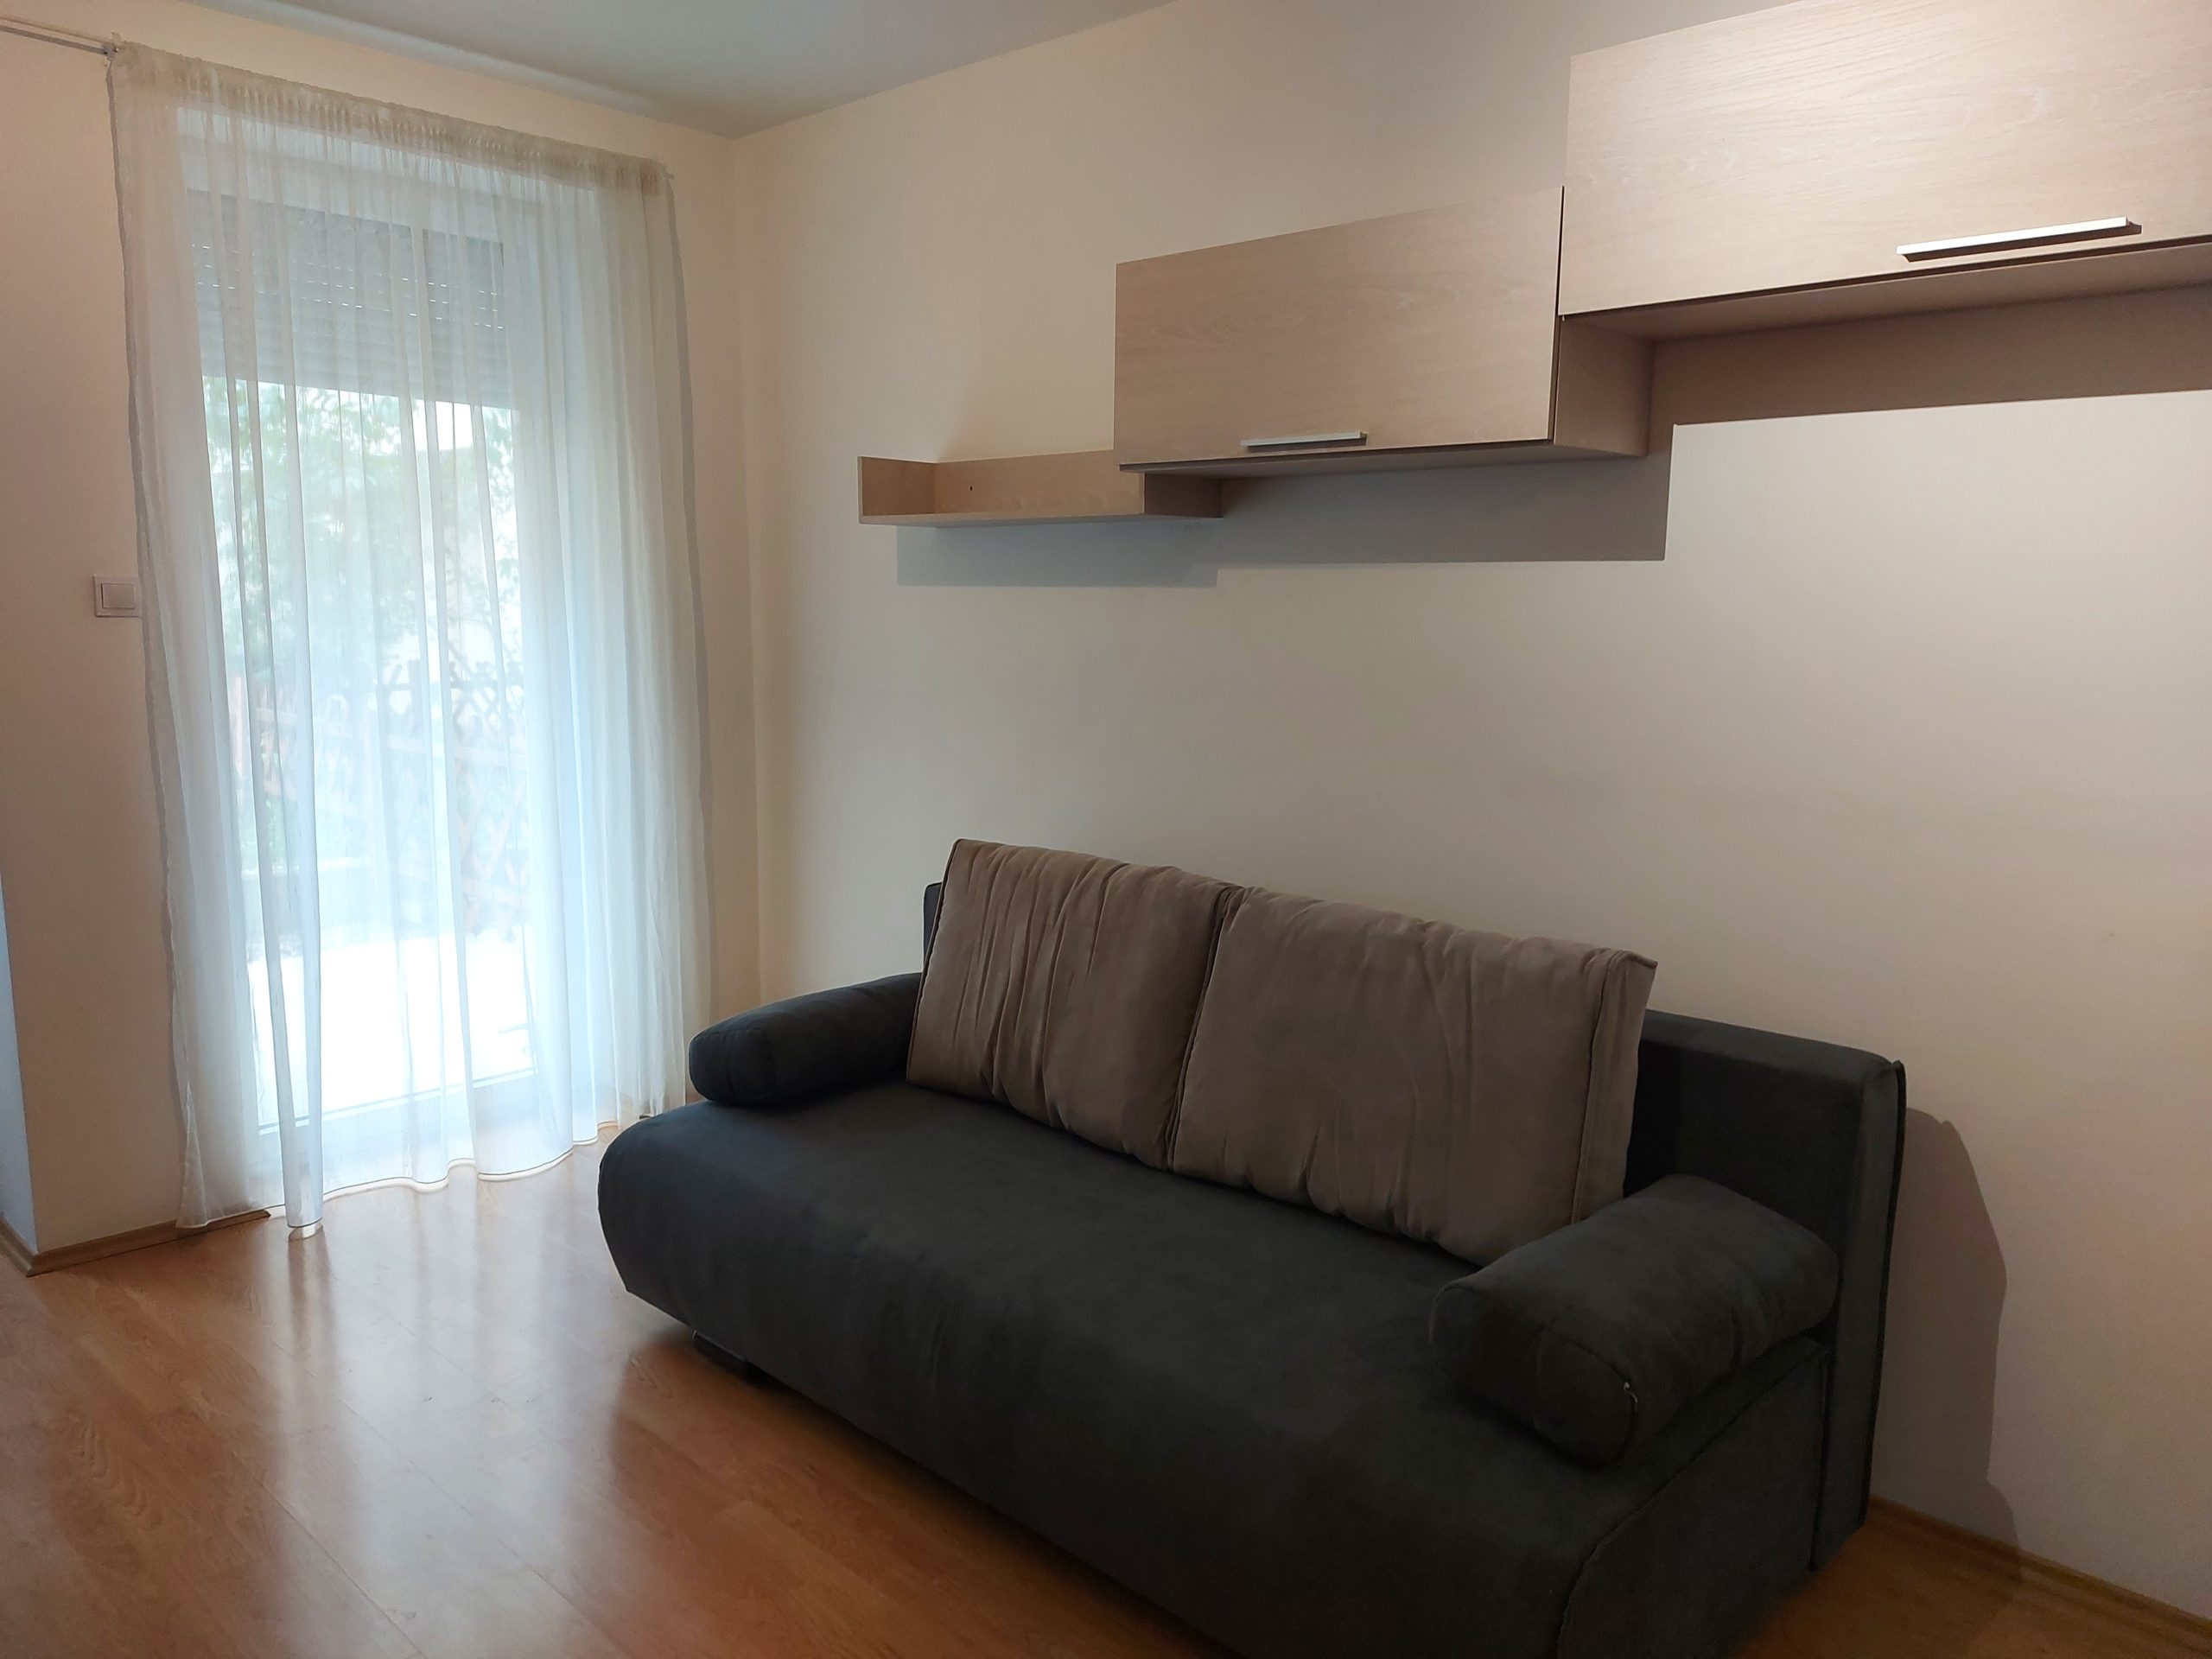 Studio apartment is for rent in Vágóhíd utca!